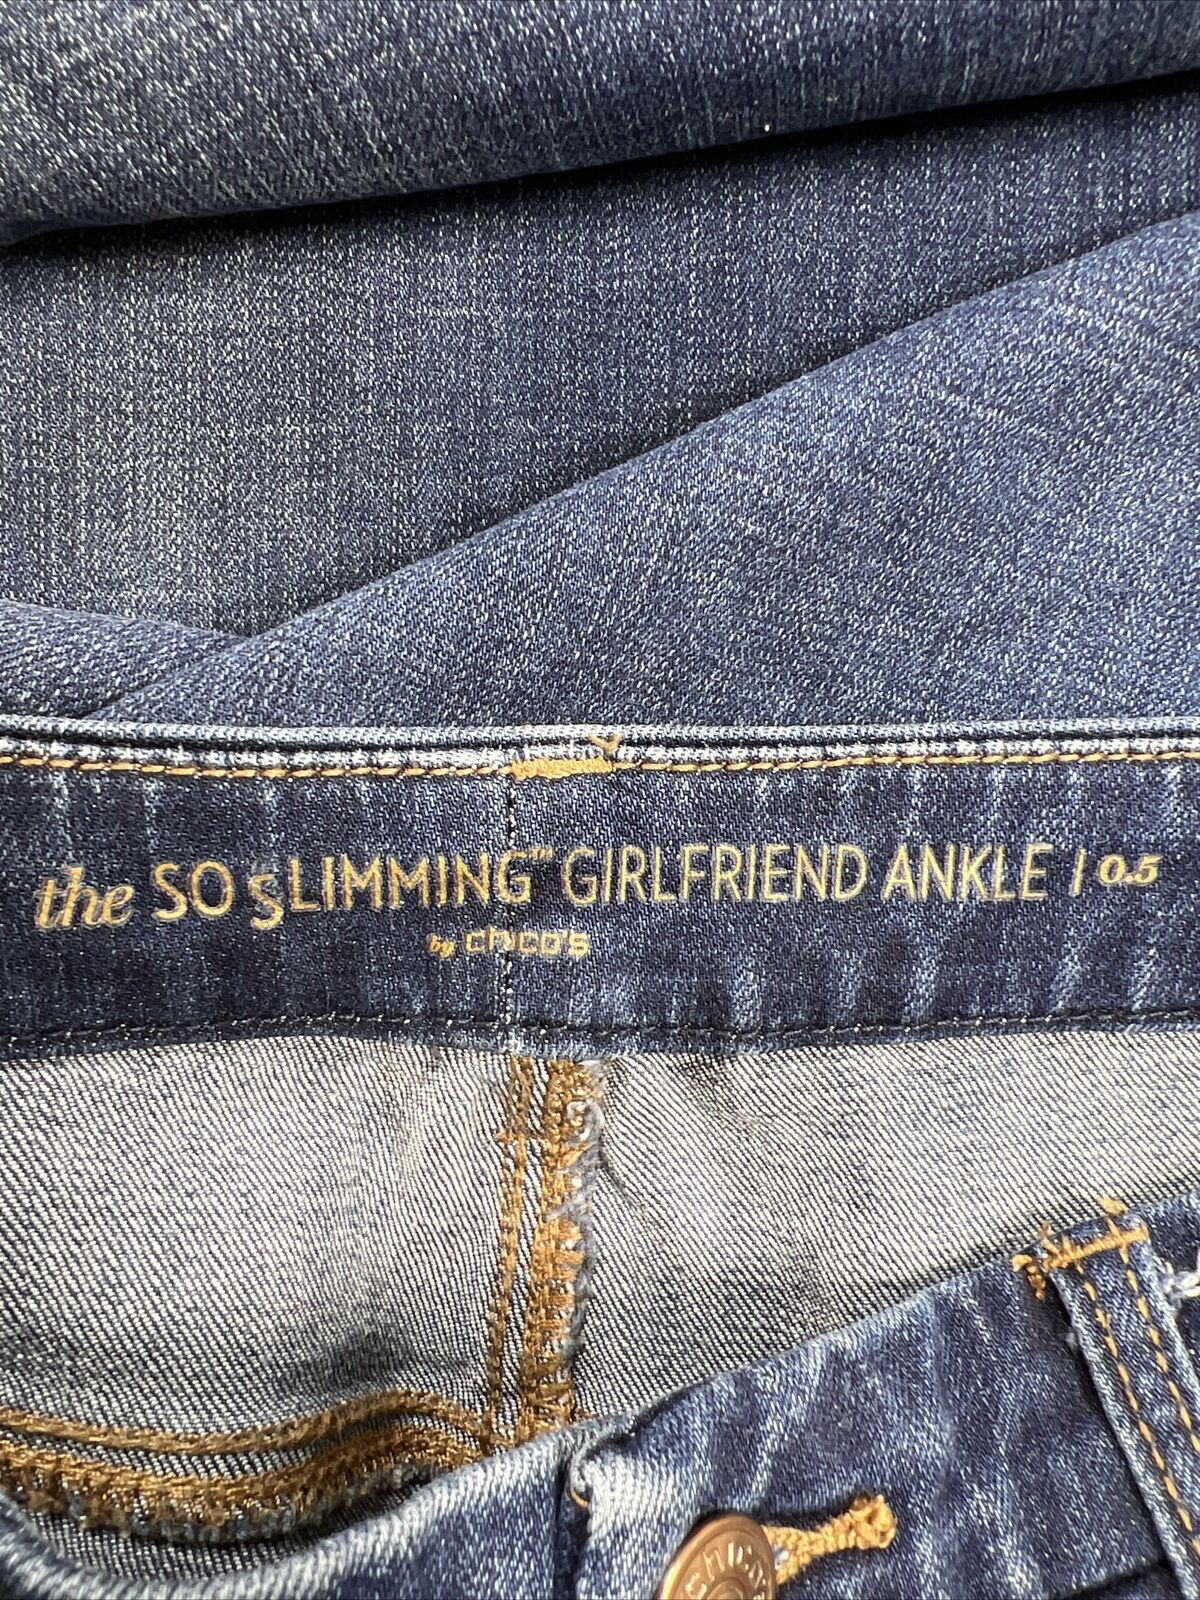 Chico's Jeans tobilleros para novia adelgazantes con lavado oscuro para mujer - 0.5/US 6